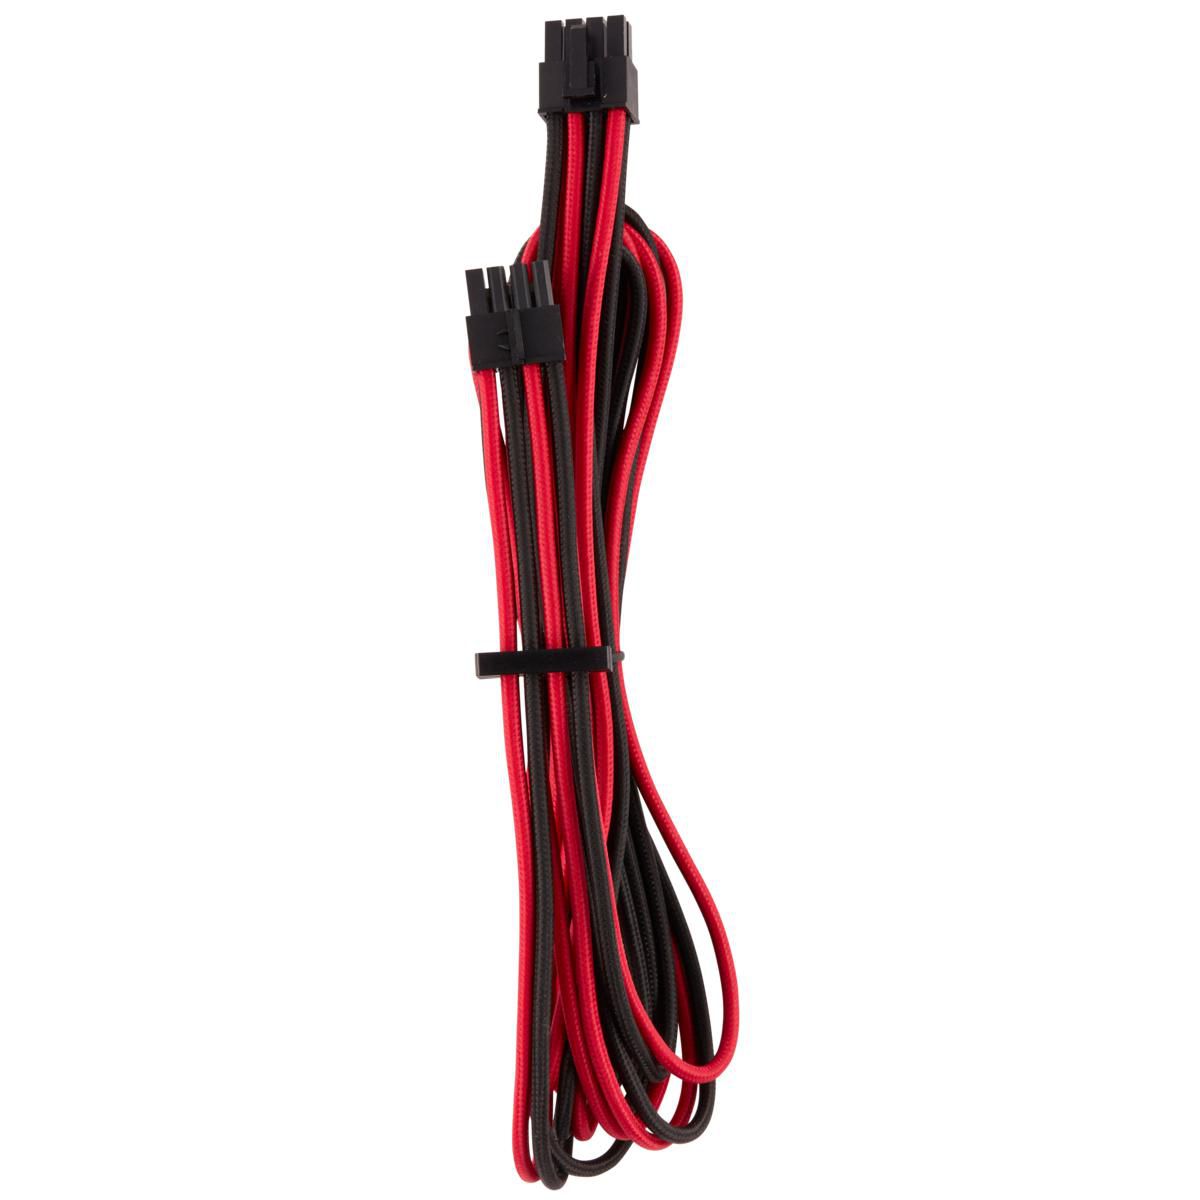 CORSAIR EPS12V CPU Cable rot / schwarz